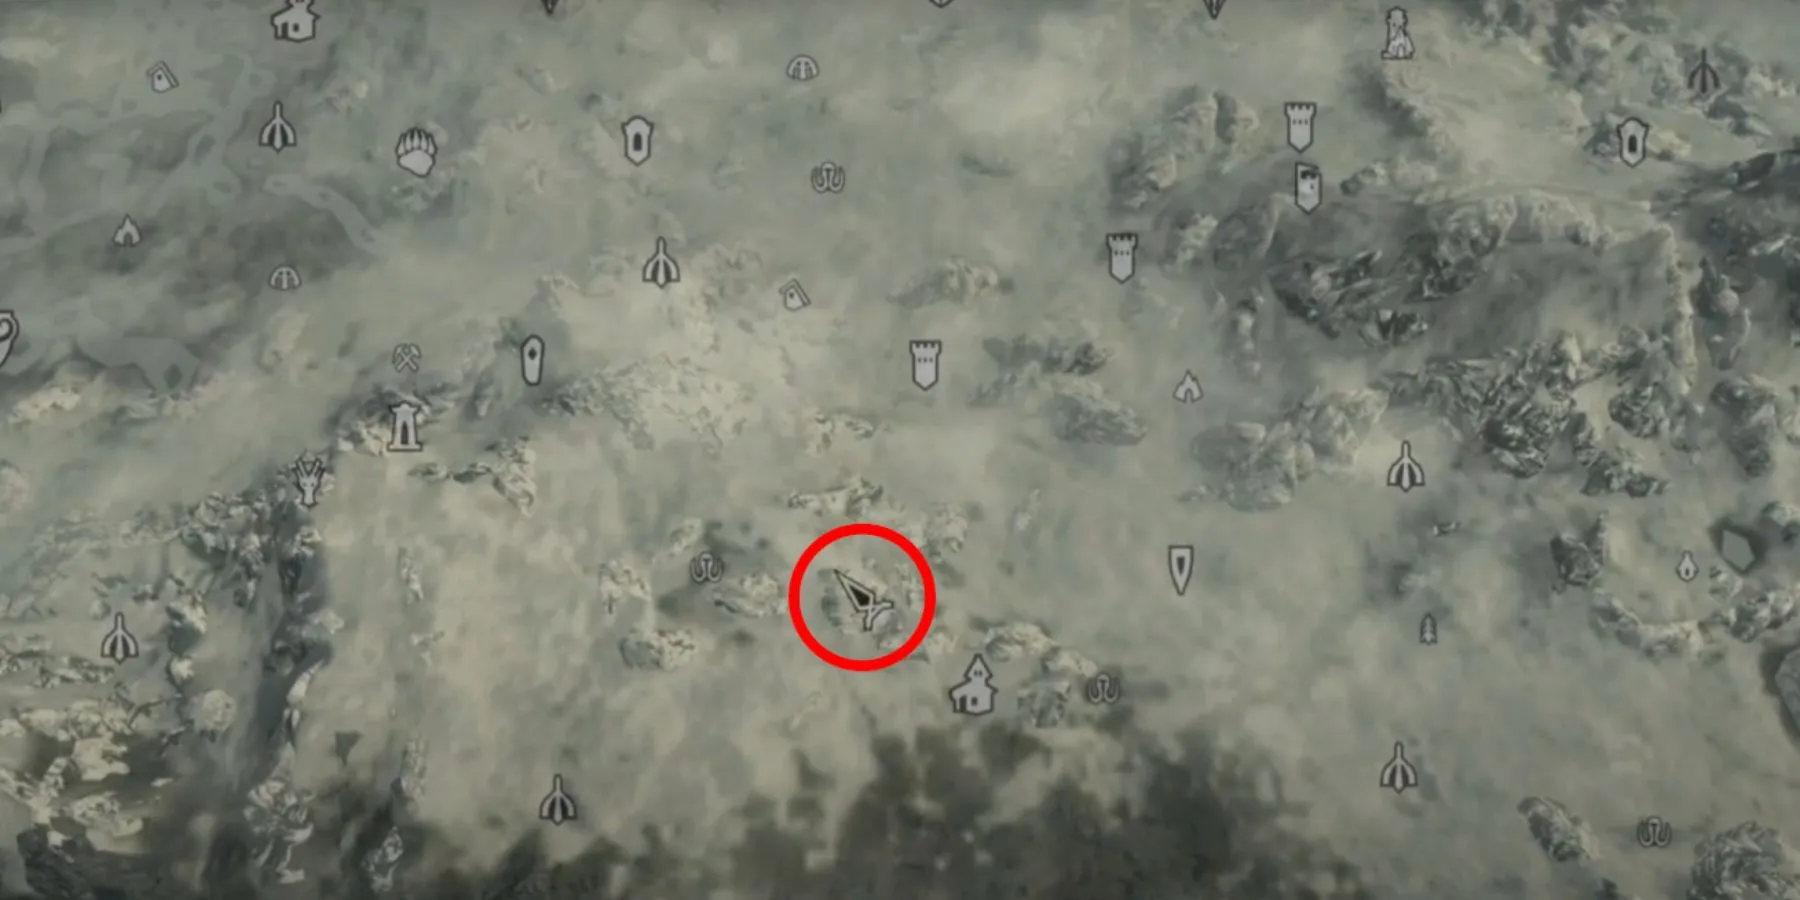 Skyrim: Blackreach location on the map